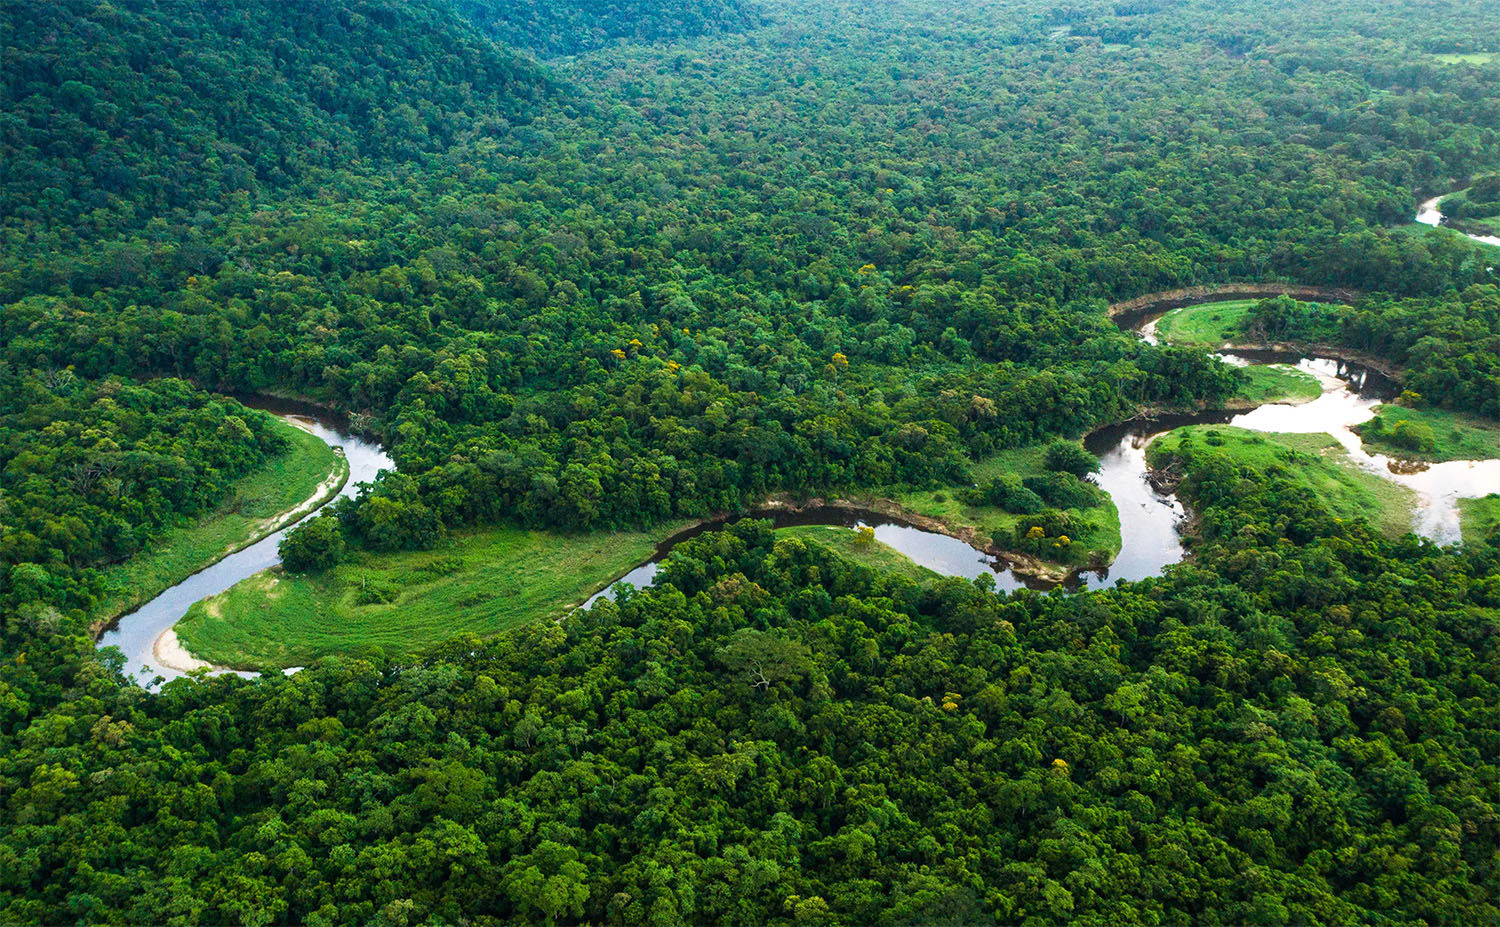 20 interesting facts about Amazon rainforest ᐈ MillionFacts